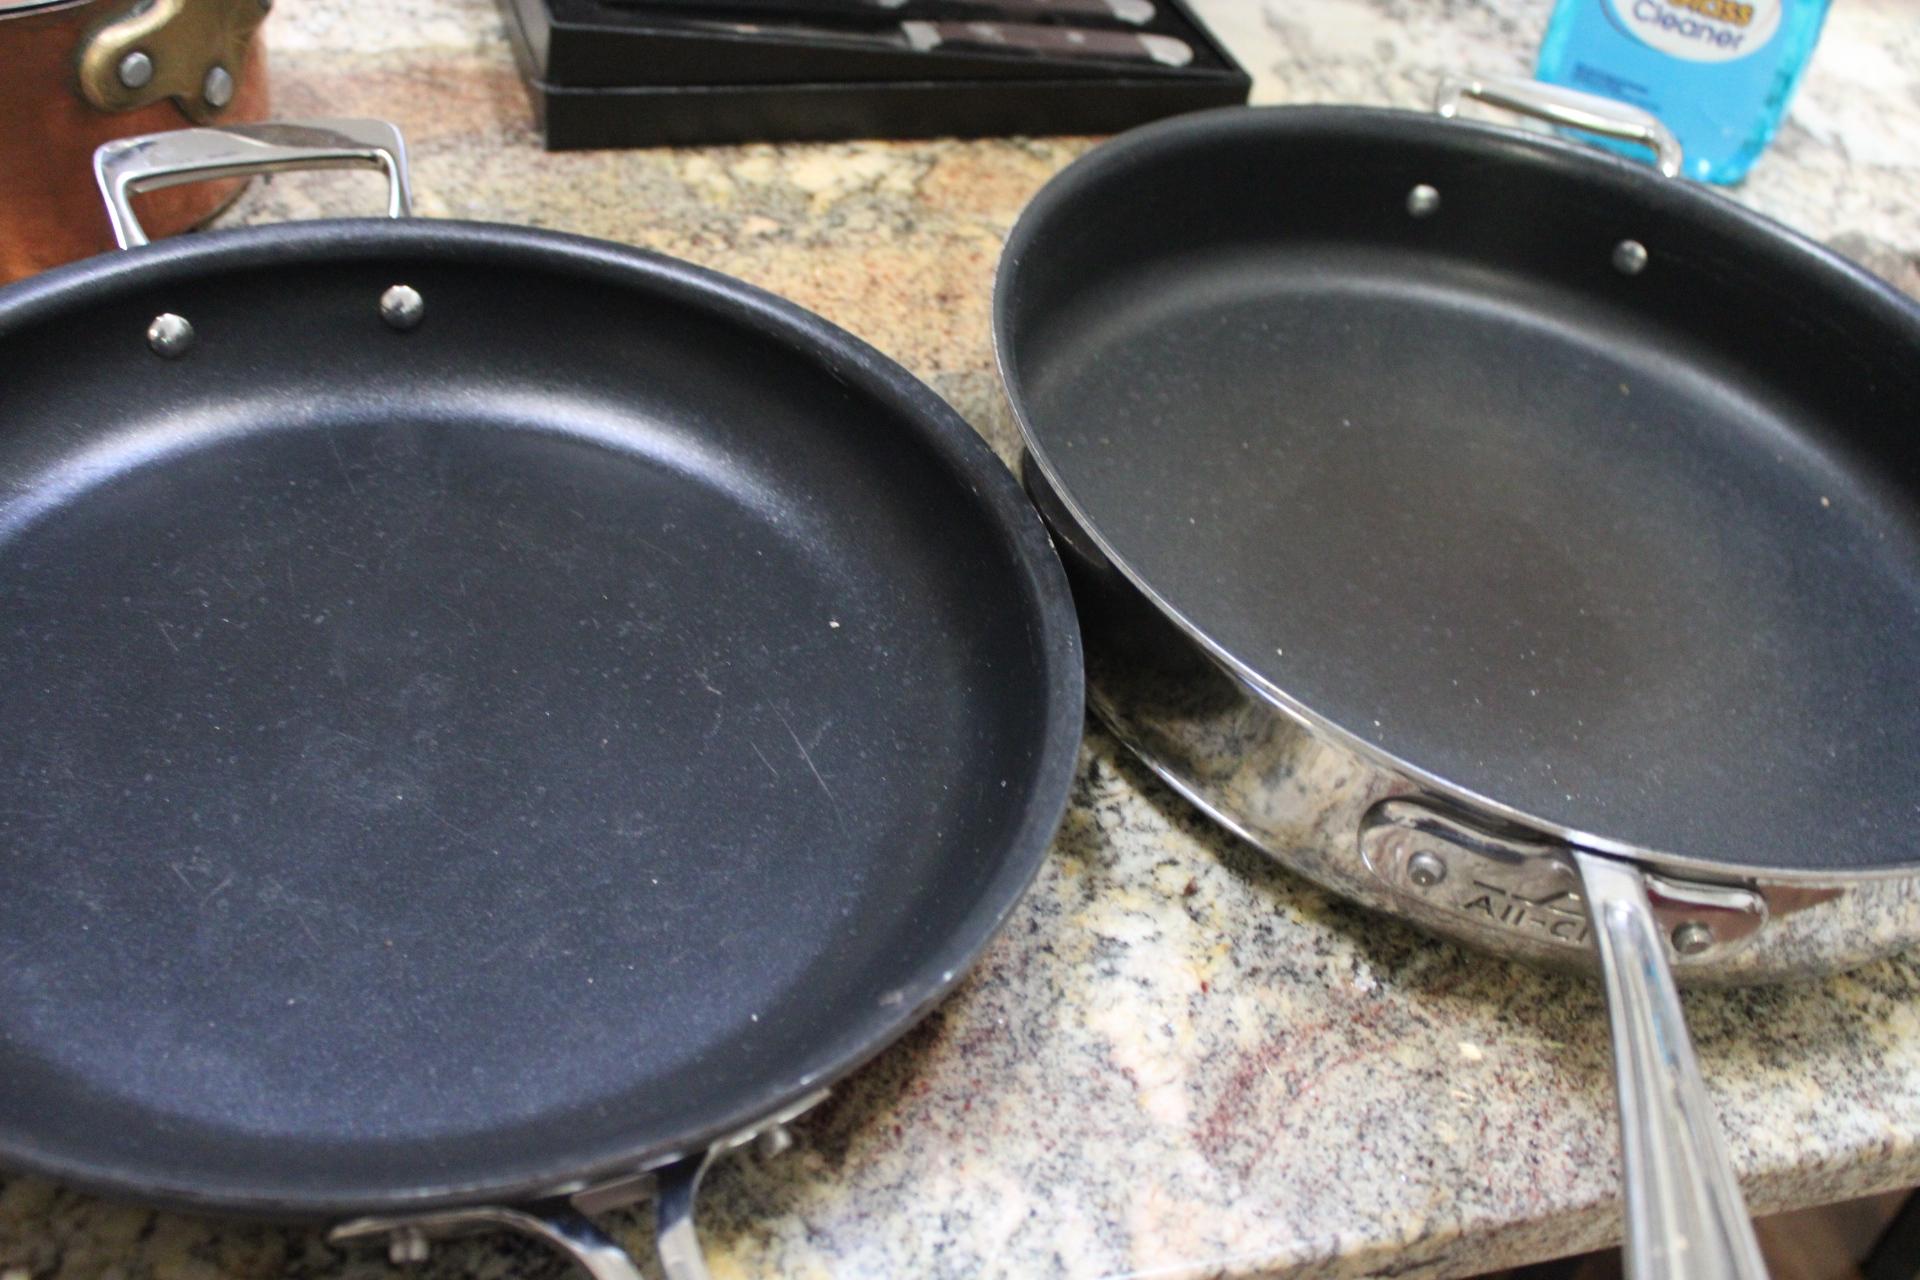 All Clad Pan, Frying Pan and Baking Pan 4 pcs